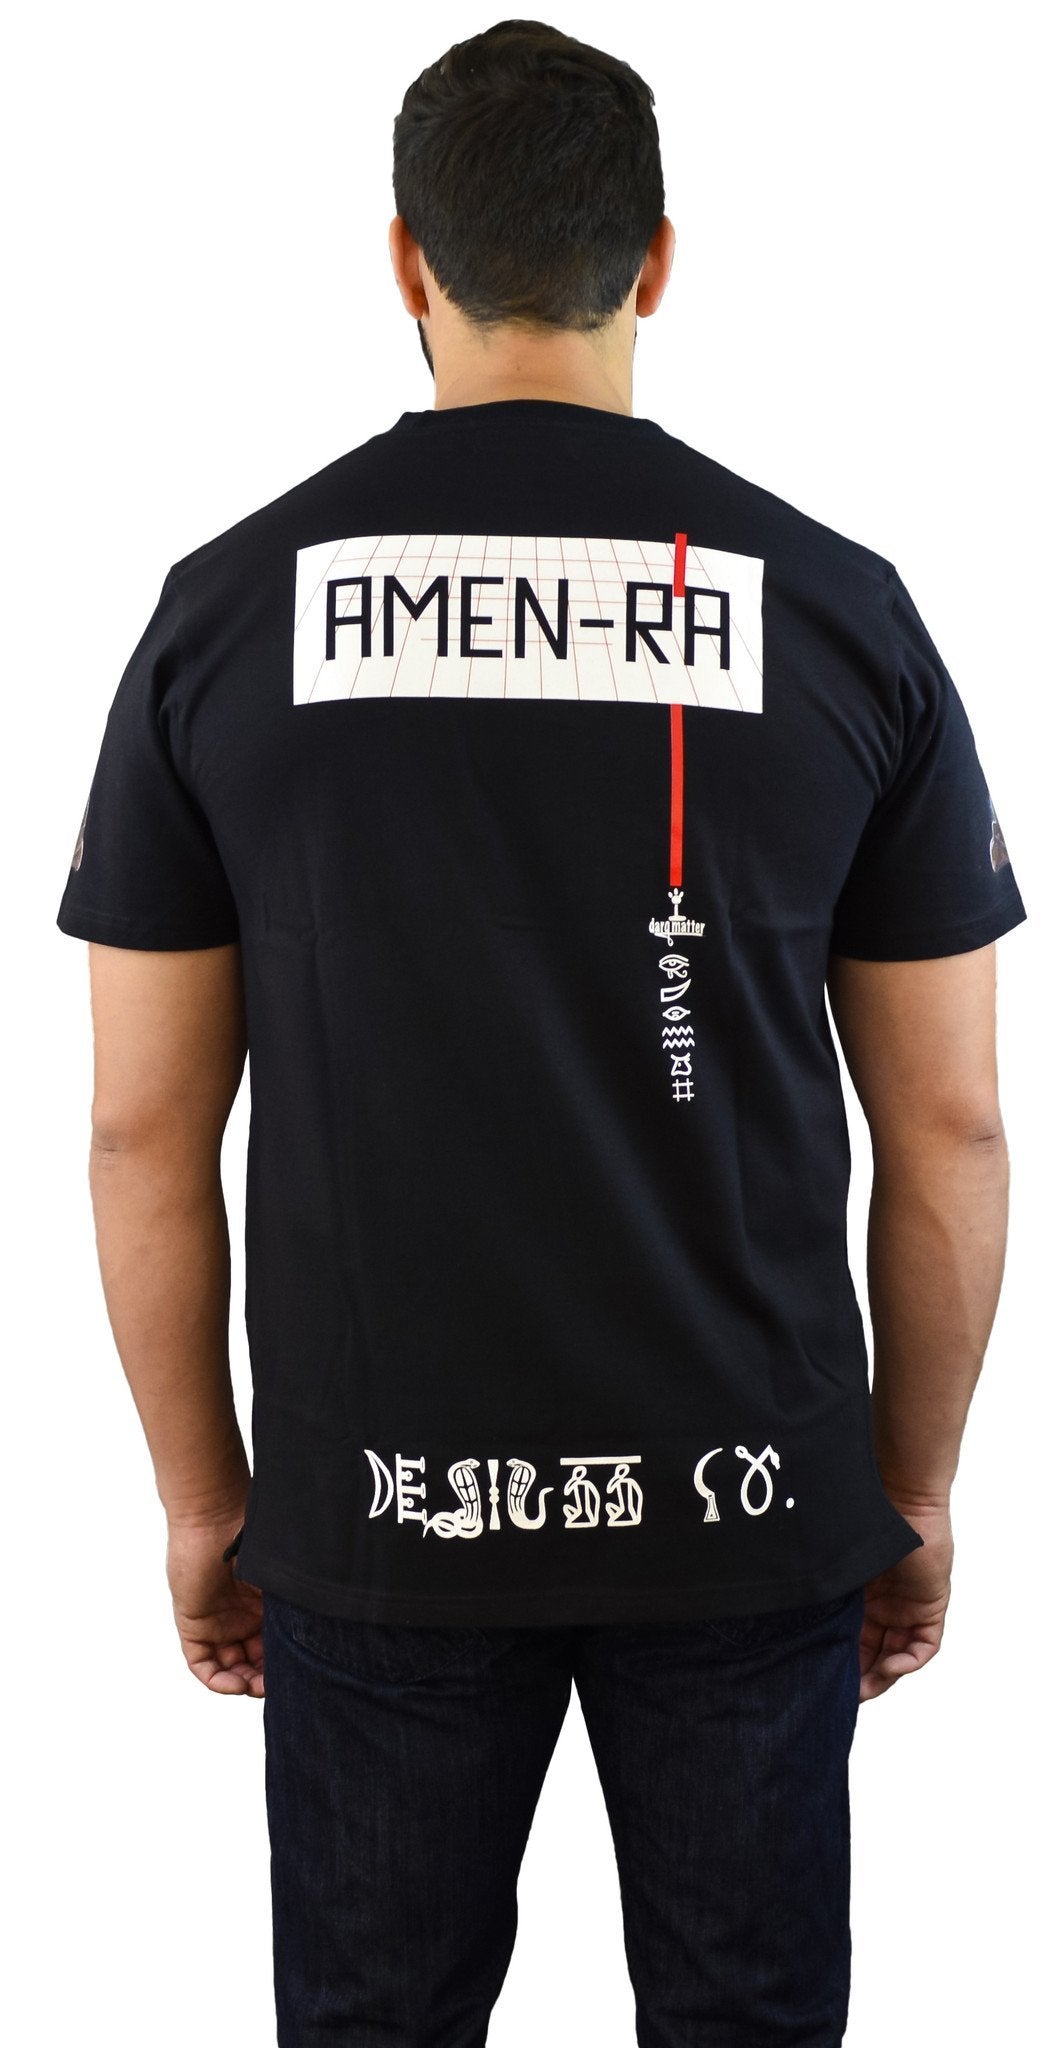 DarqMatterDesign CutnSew T-Shirts Amen-Ra